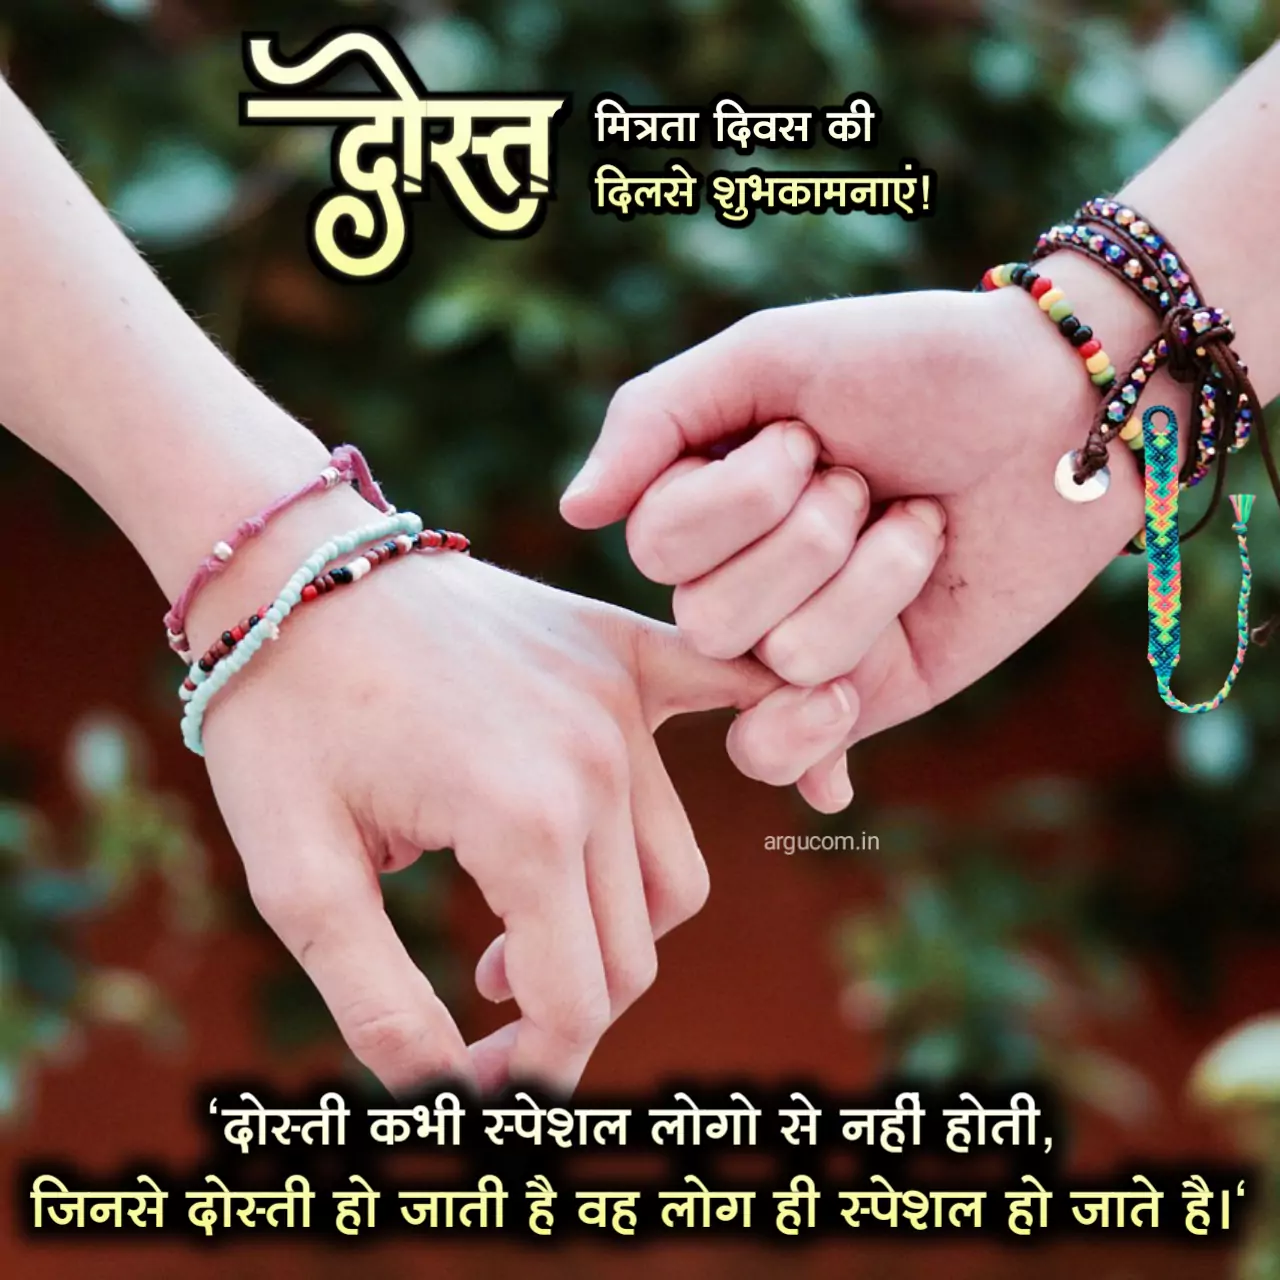 Friendship Day quotes in hindi , फ्रेंडशिप डे कोट्स हिंदी